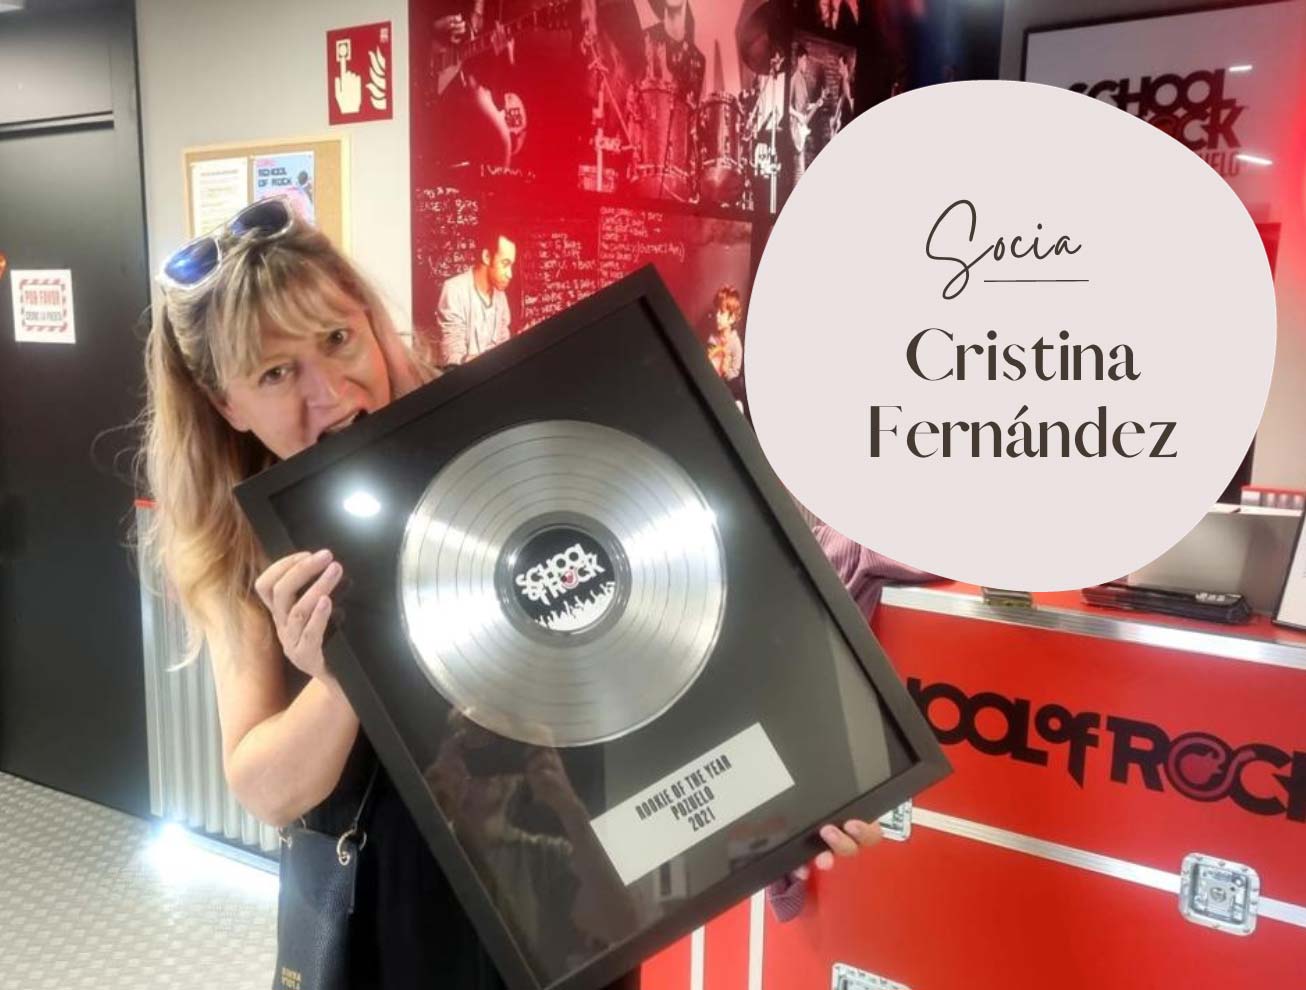 Cristina Fernández School of Rock